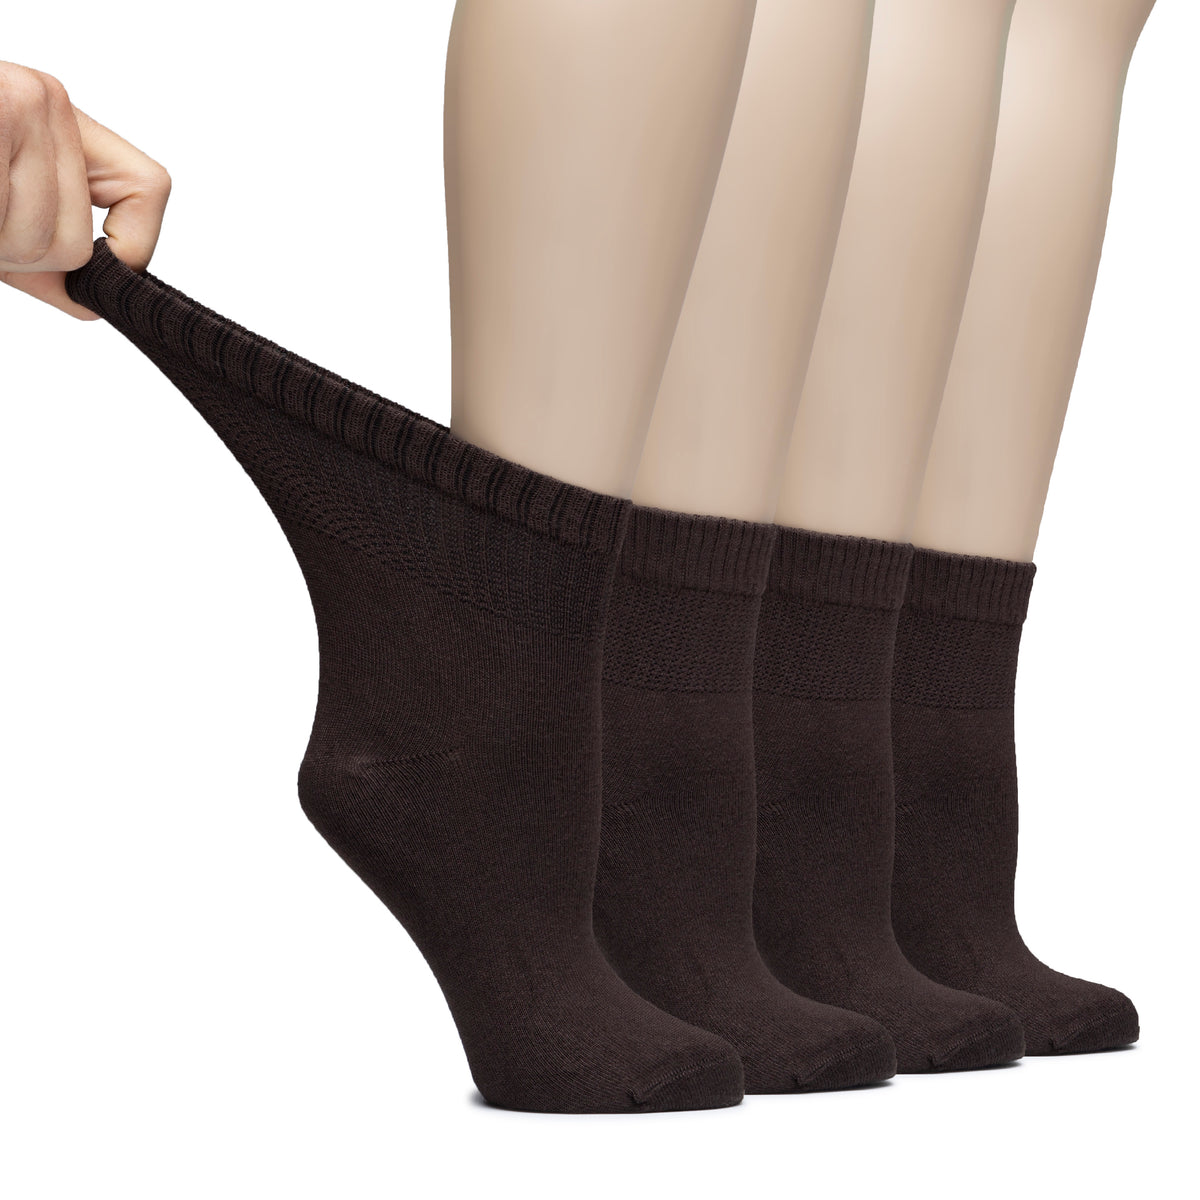 Hugh Ugoli Lightweight Women's Diabetic Ankle Socks Bamboo Thin Socks Seamless Toe and Non-Binding Top, 4 Pairs, , Shoe Size: 6-9/10-12 | Shoe Size: 6-9 | Fuchsia